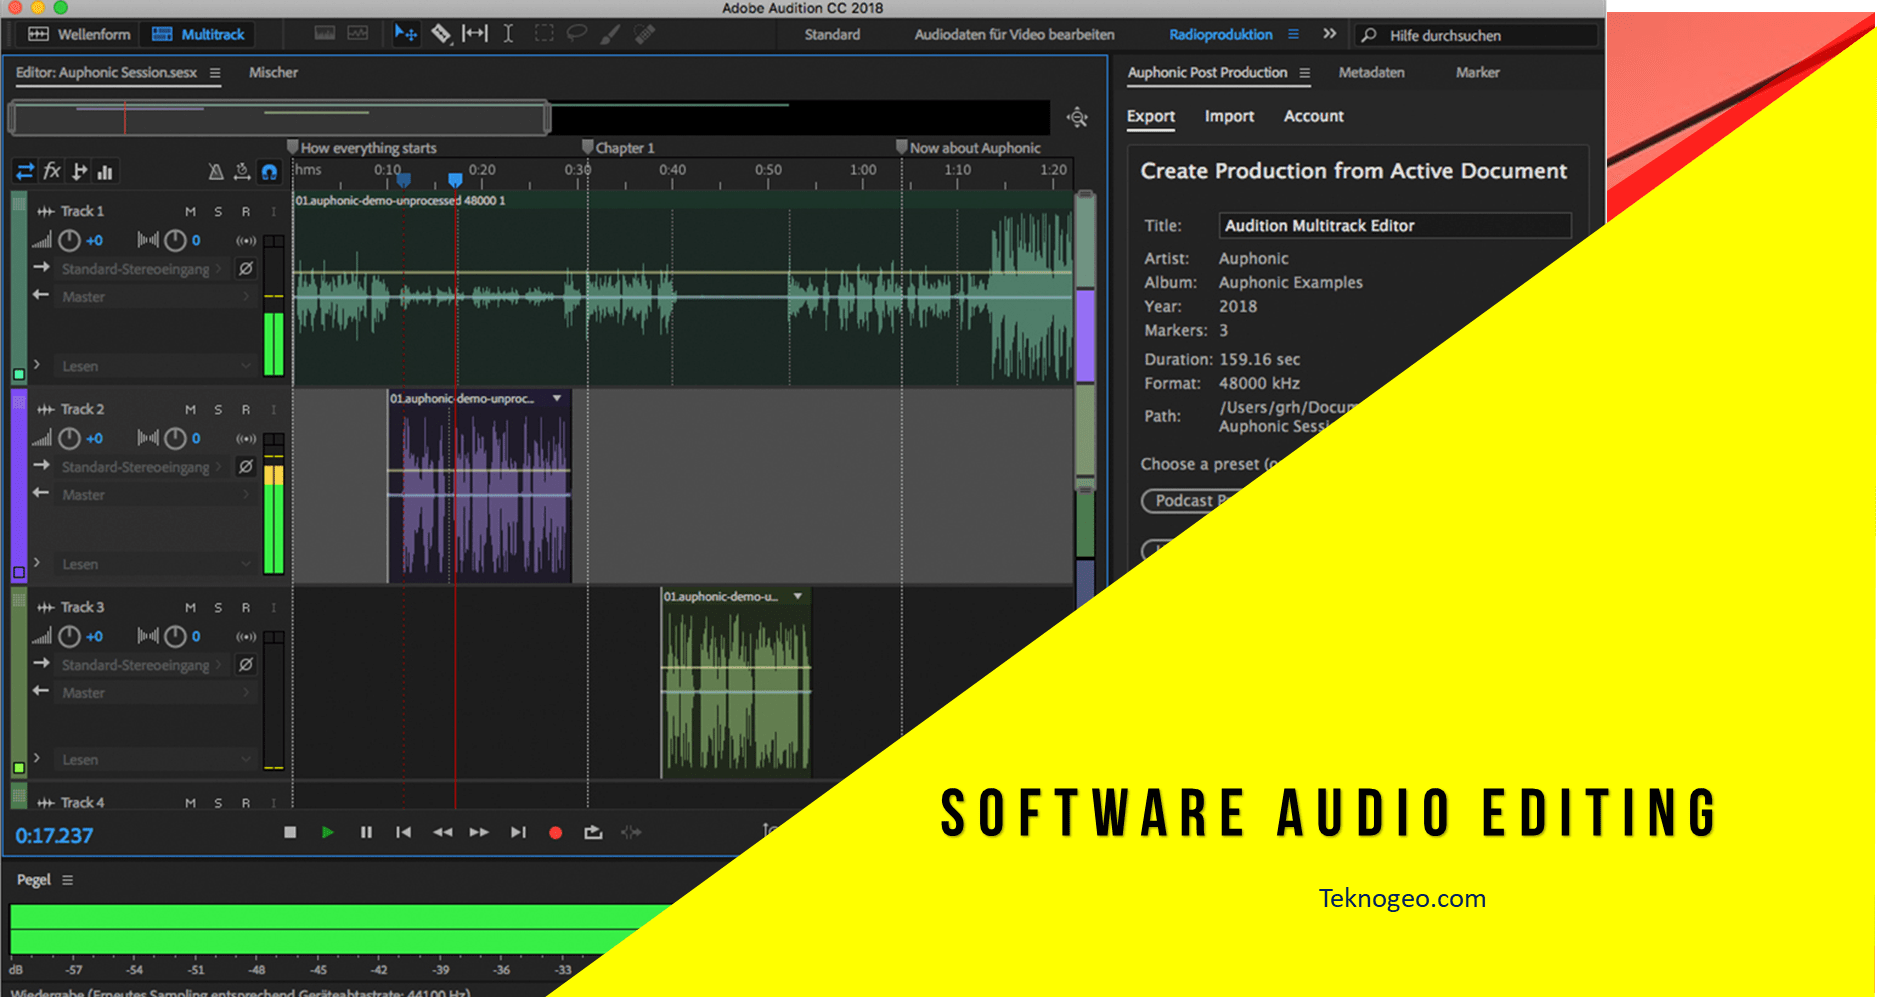 Software audio editing